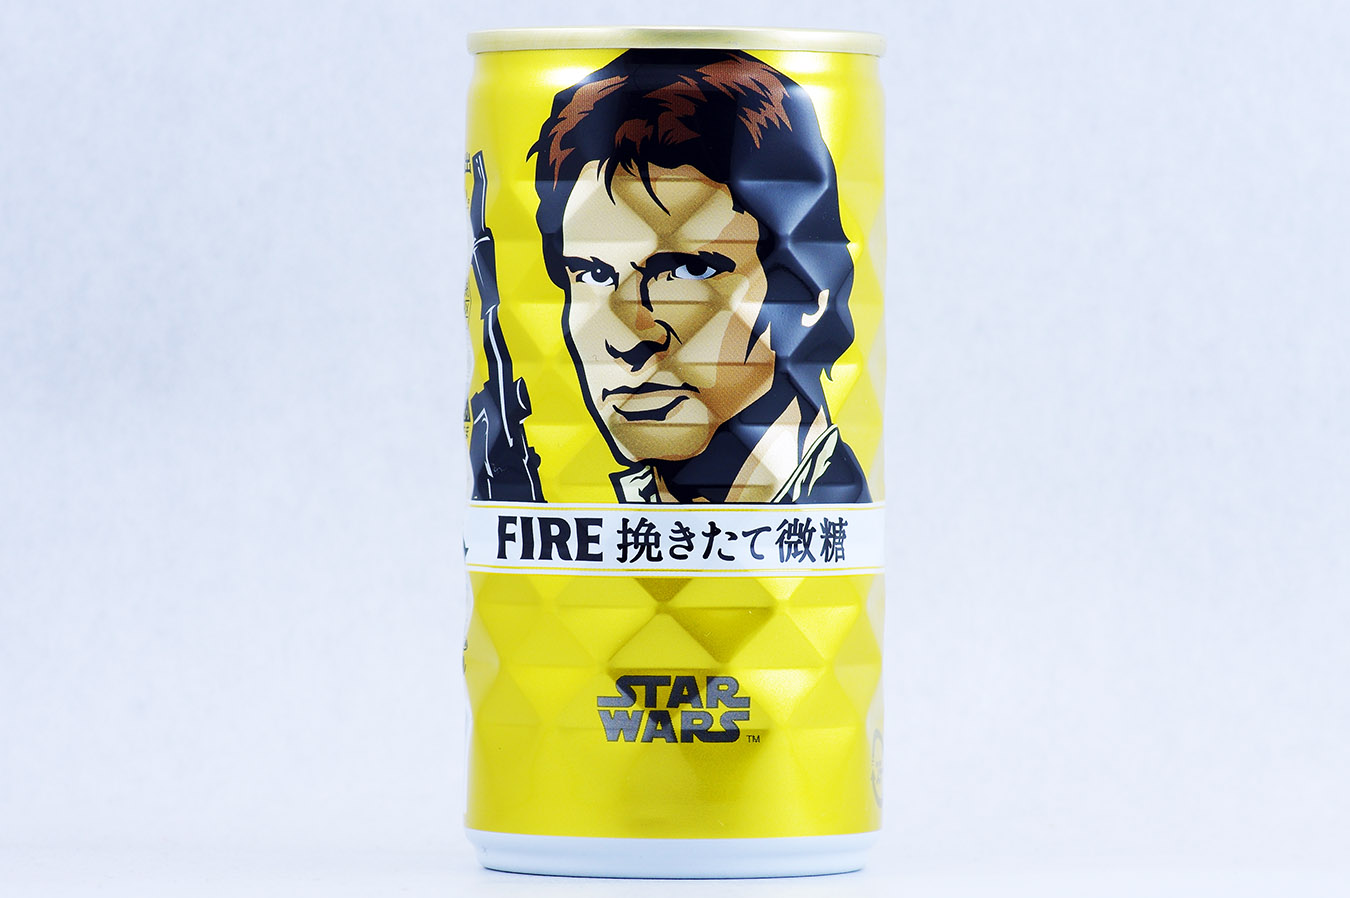 FIRE 挽きたて微糖 「STAR WARS」限定デザイン ハン・ソロ 2015年12月